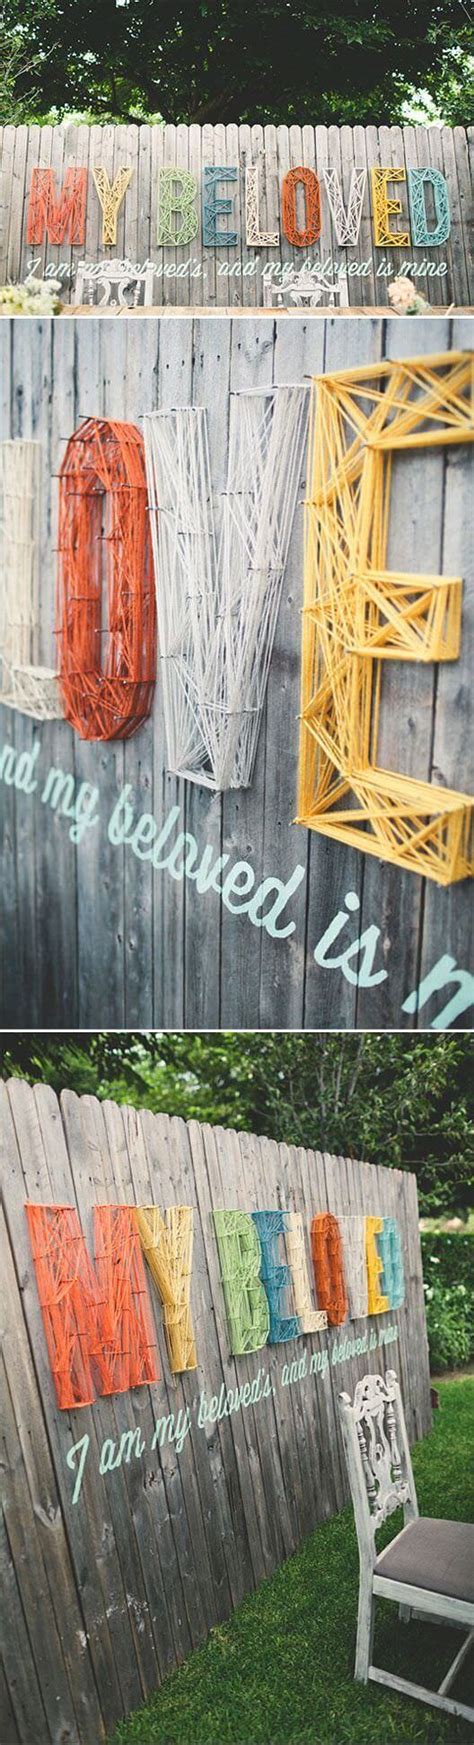 15 Backyard Garden Fence Makeover Diy Ideas And Projects Diy Art